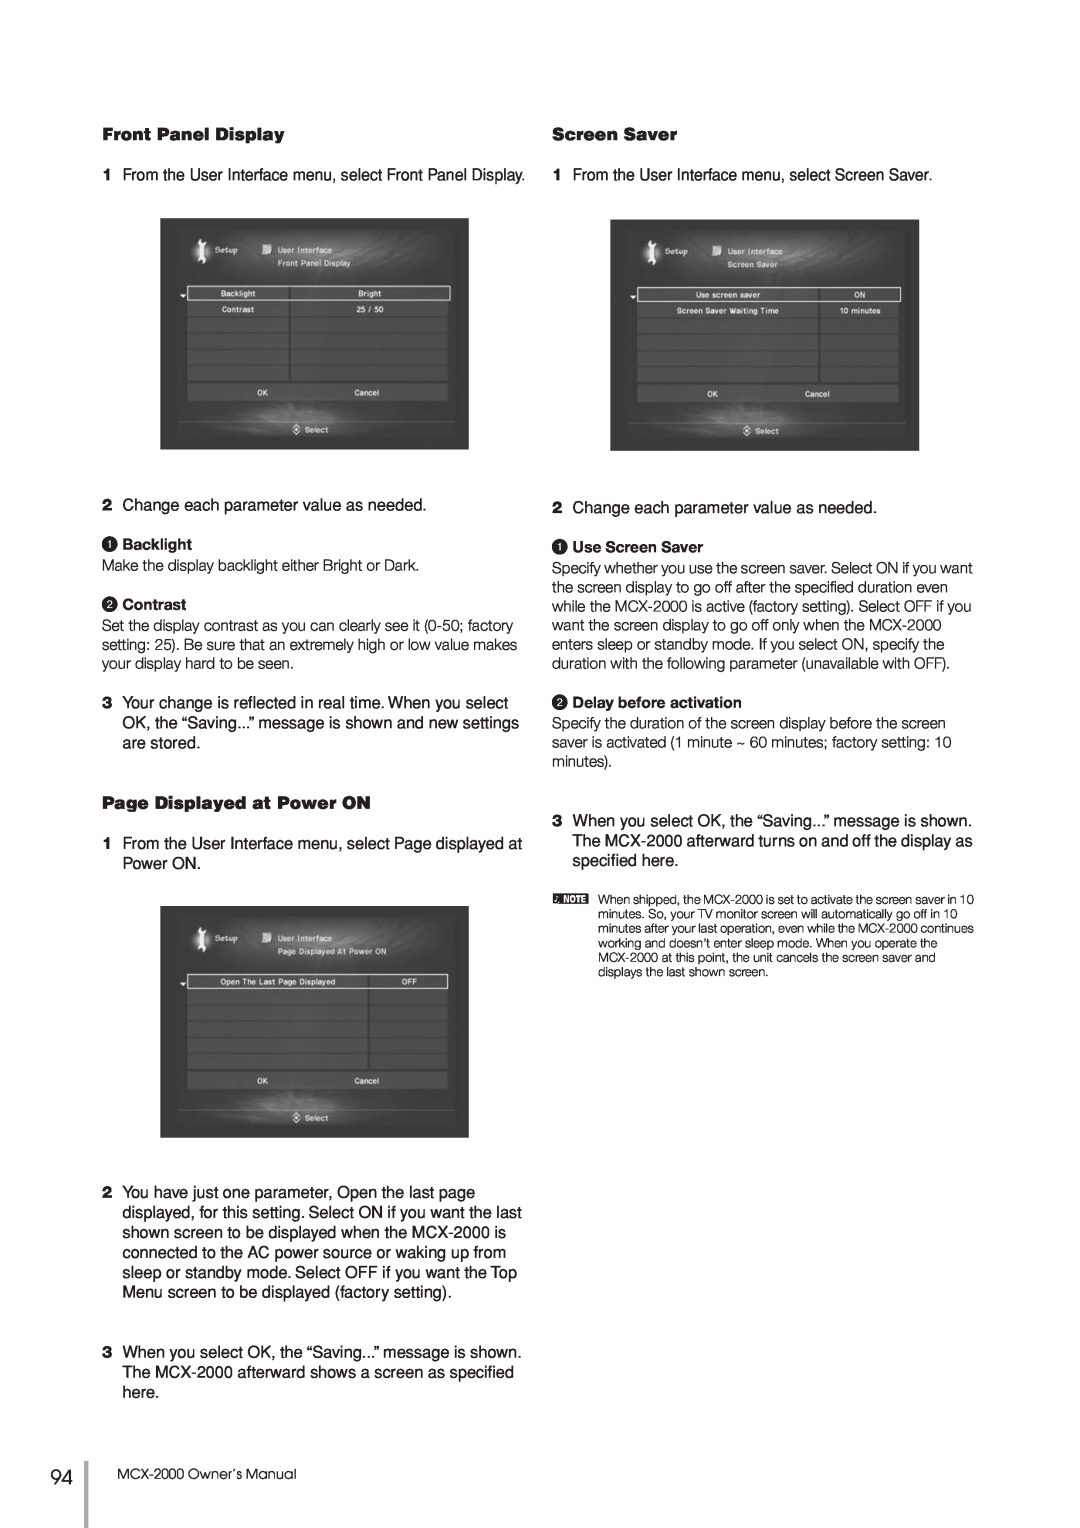 Yamaha MCX-2000 setup guide Front Panel Display, Screen Saver, Page Displayed at Power ON 